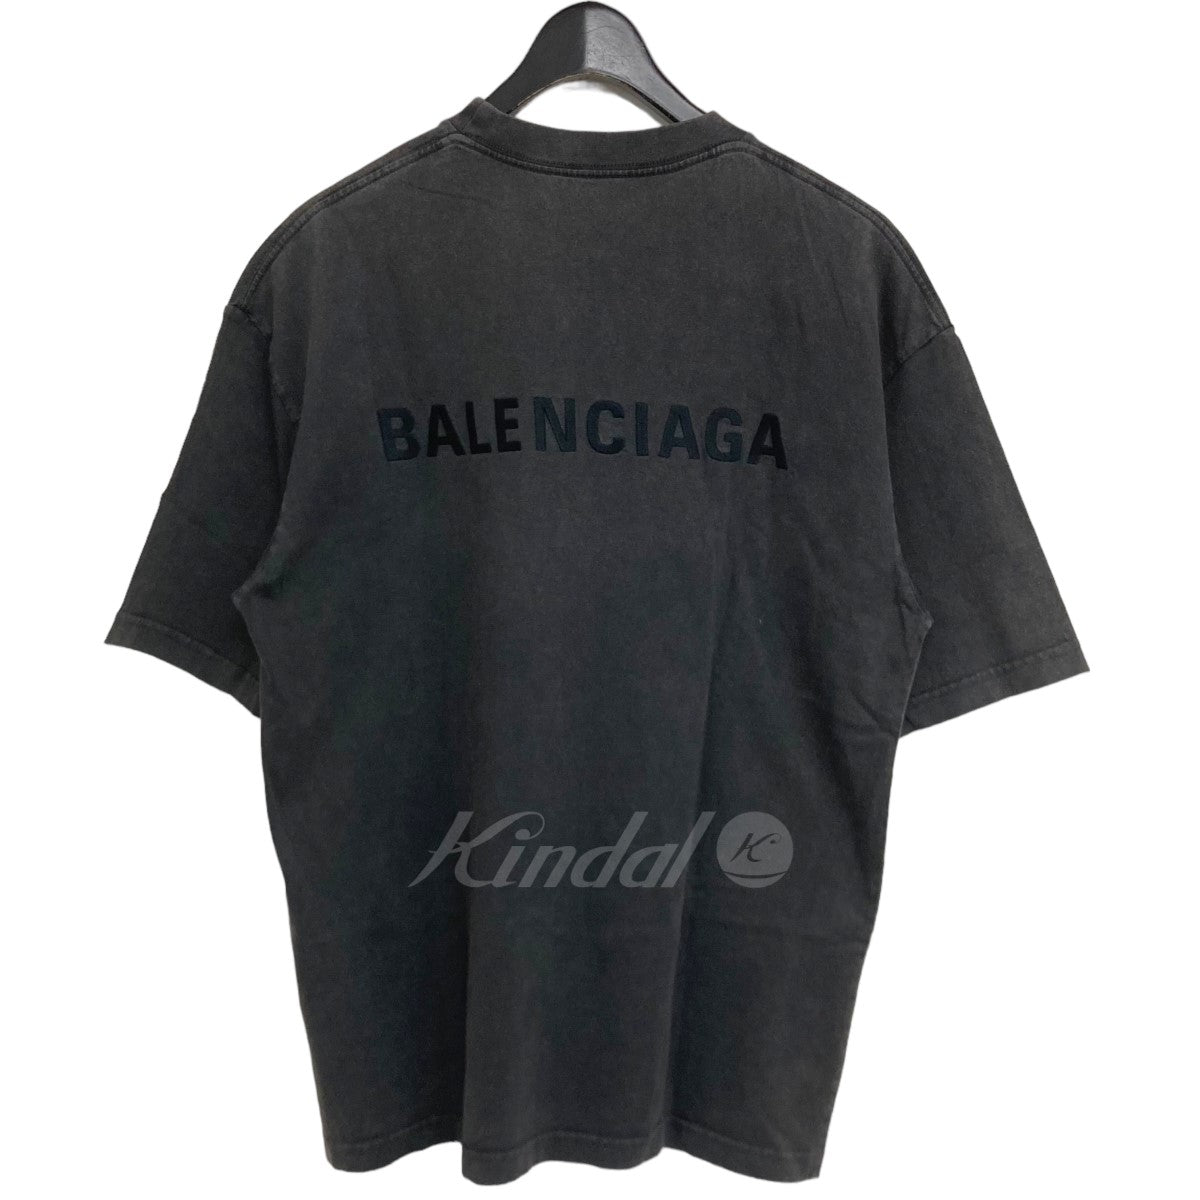 BALENCIAGA(バレンシアガ) ロゴTシャツ 612966 612966 グレー サイズ ...